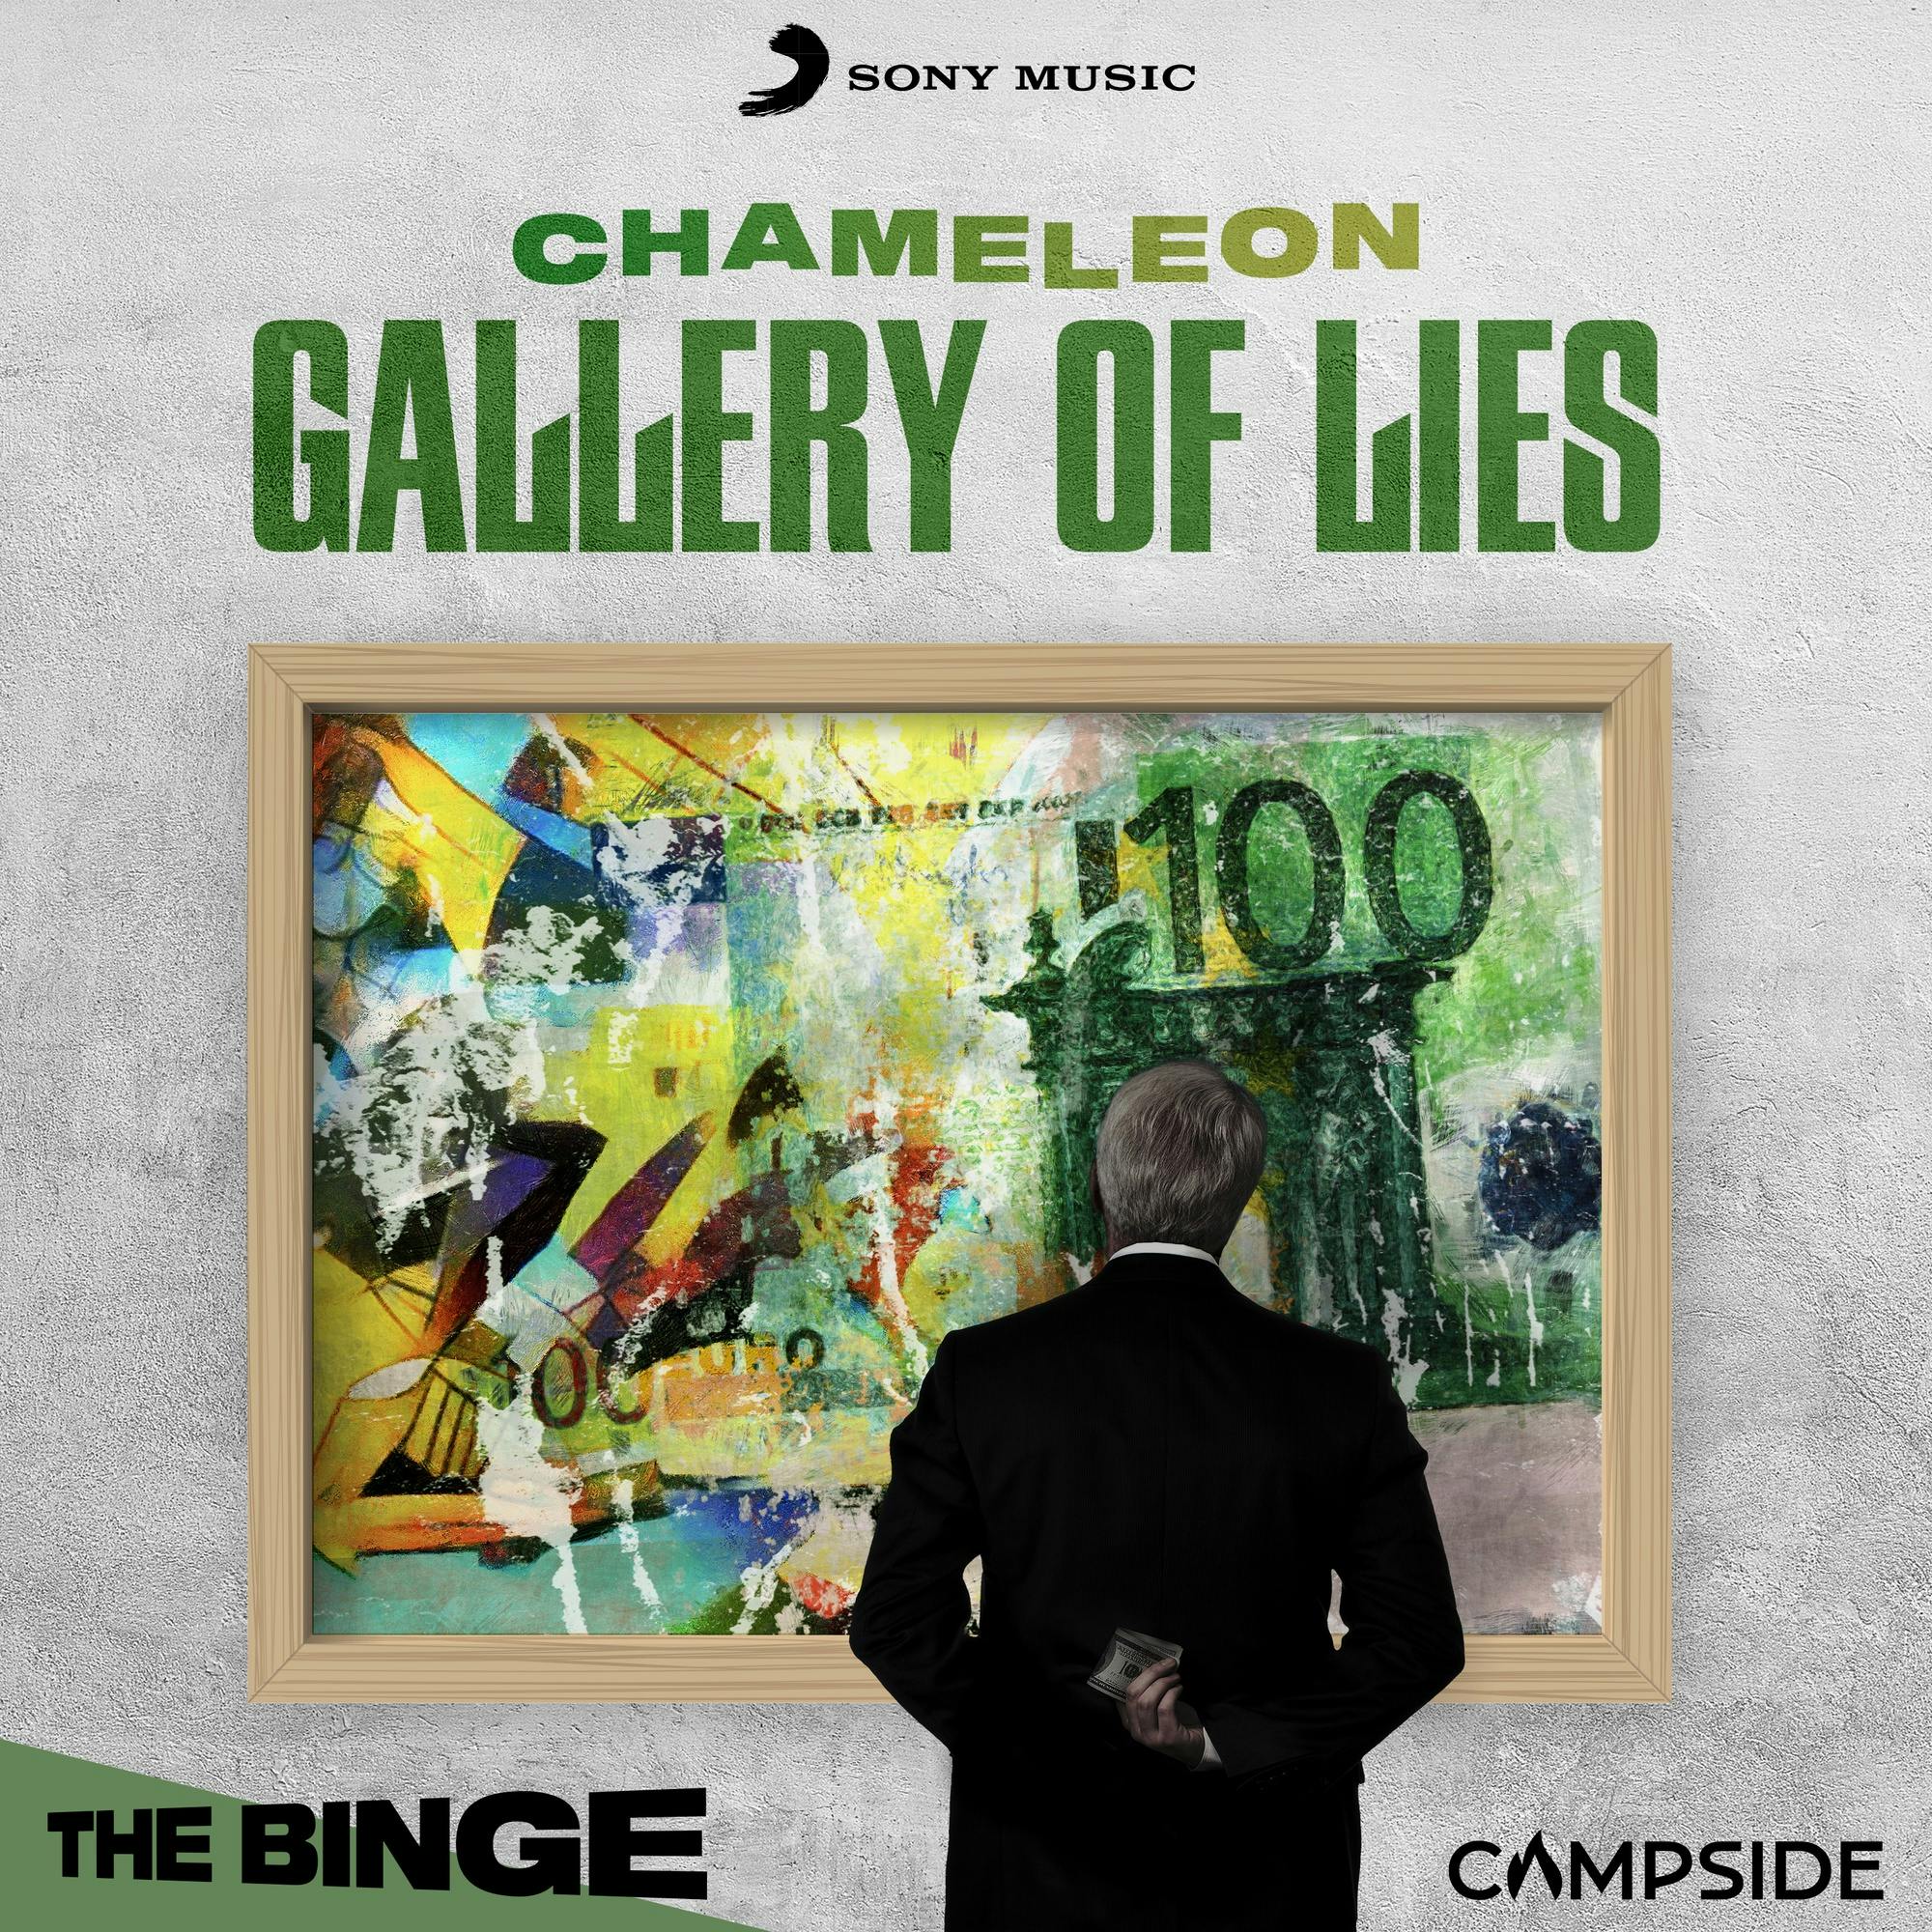 Introducing Season Six of Chameleon: Gallery of Lies